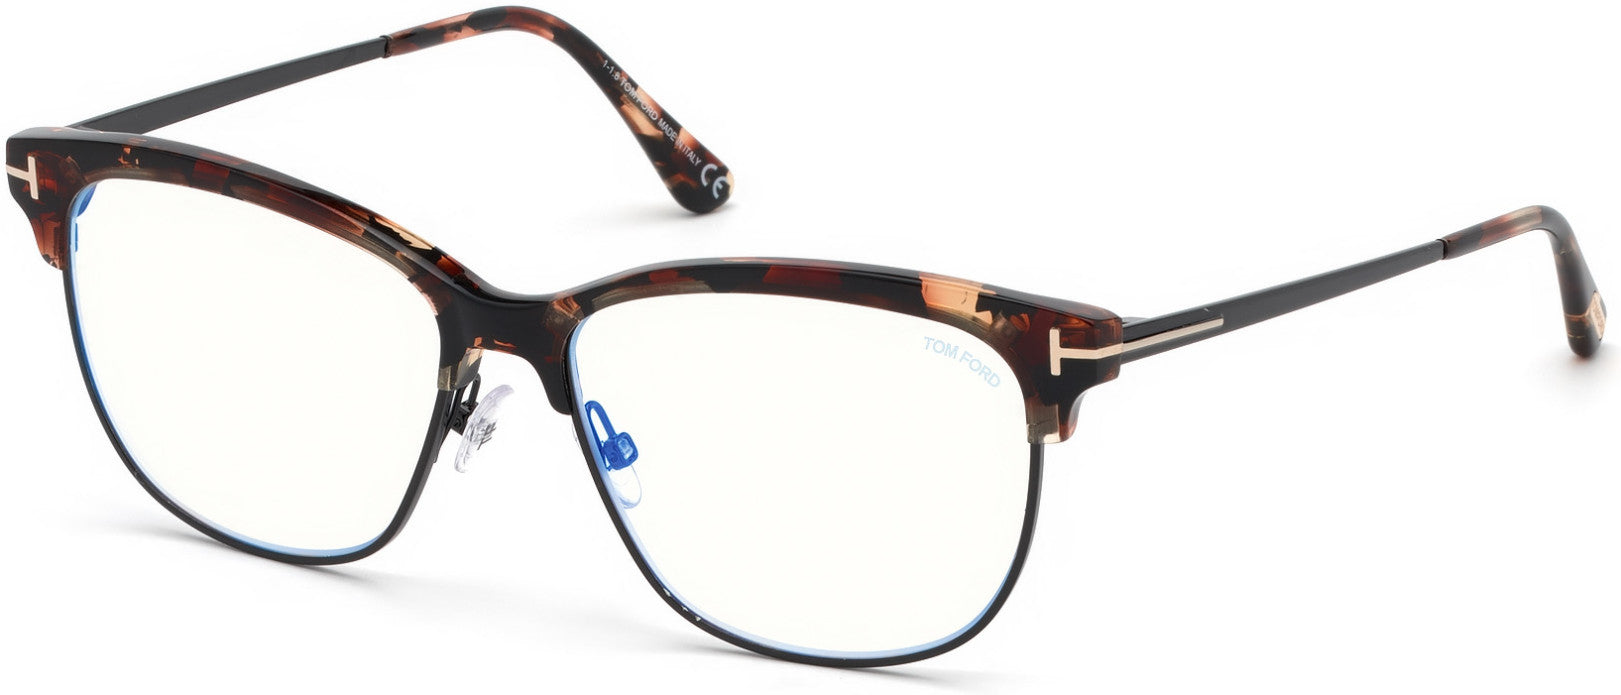 Tom Ford FT5546-B Geometric Eyeglasses 055-055 - Shiny Red Havana, Shiny Black  / Blue Block Lenses